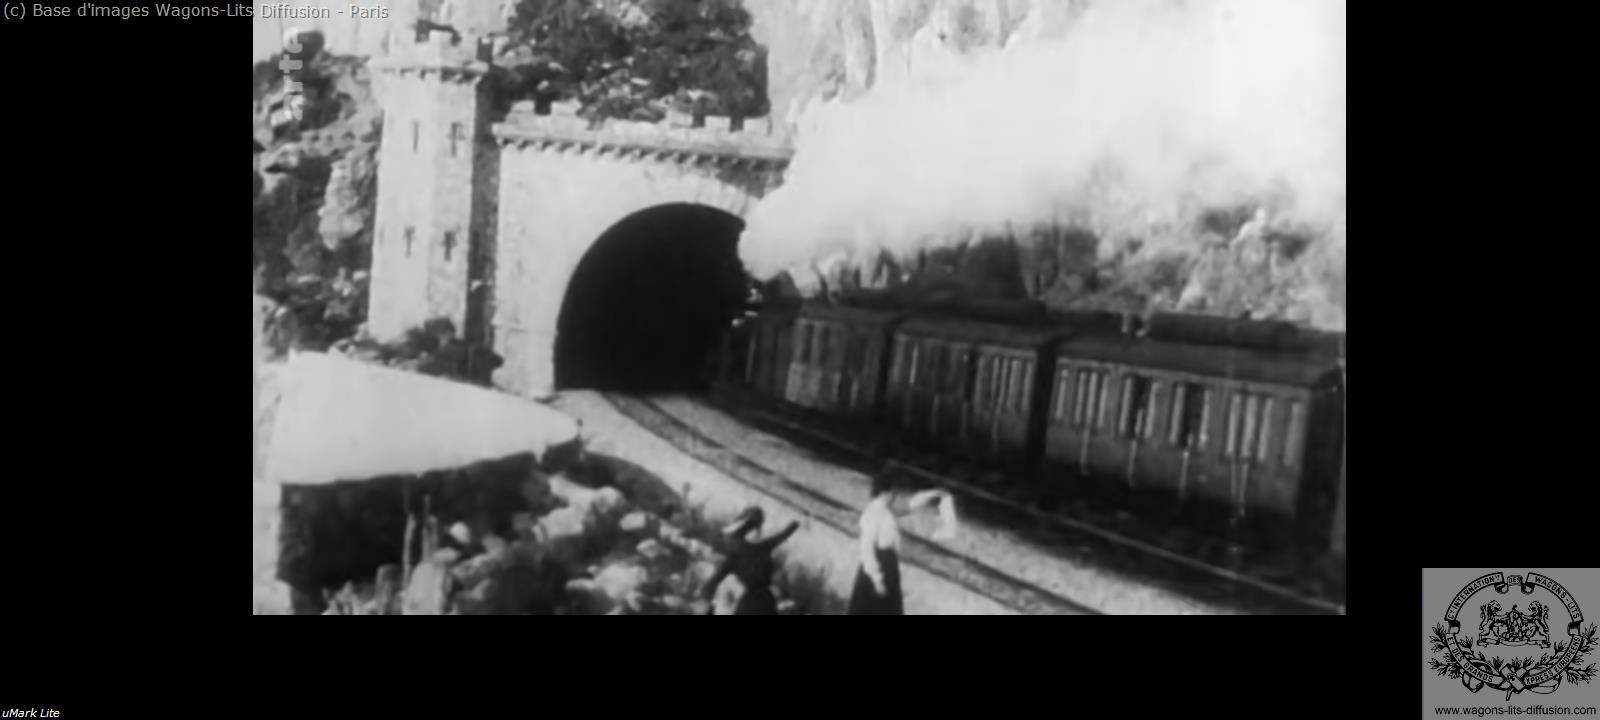 Wl le tunnel du simplon en 1920